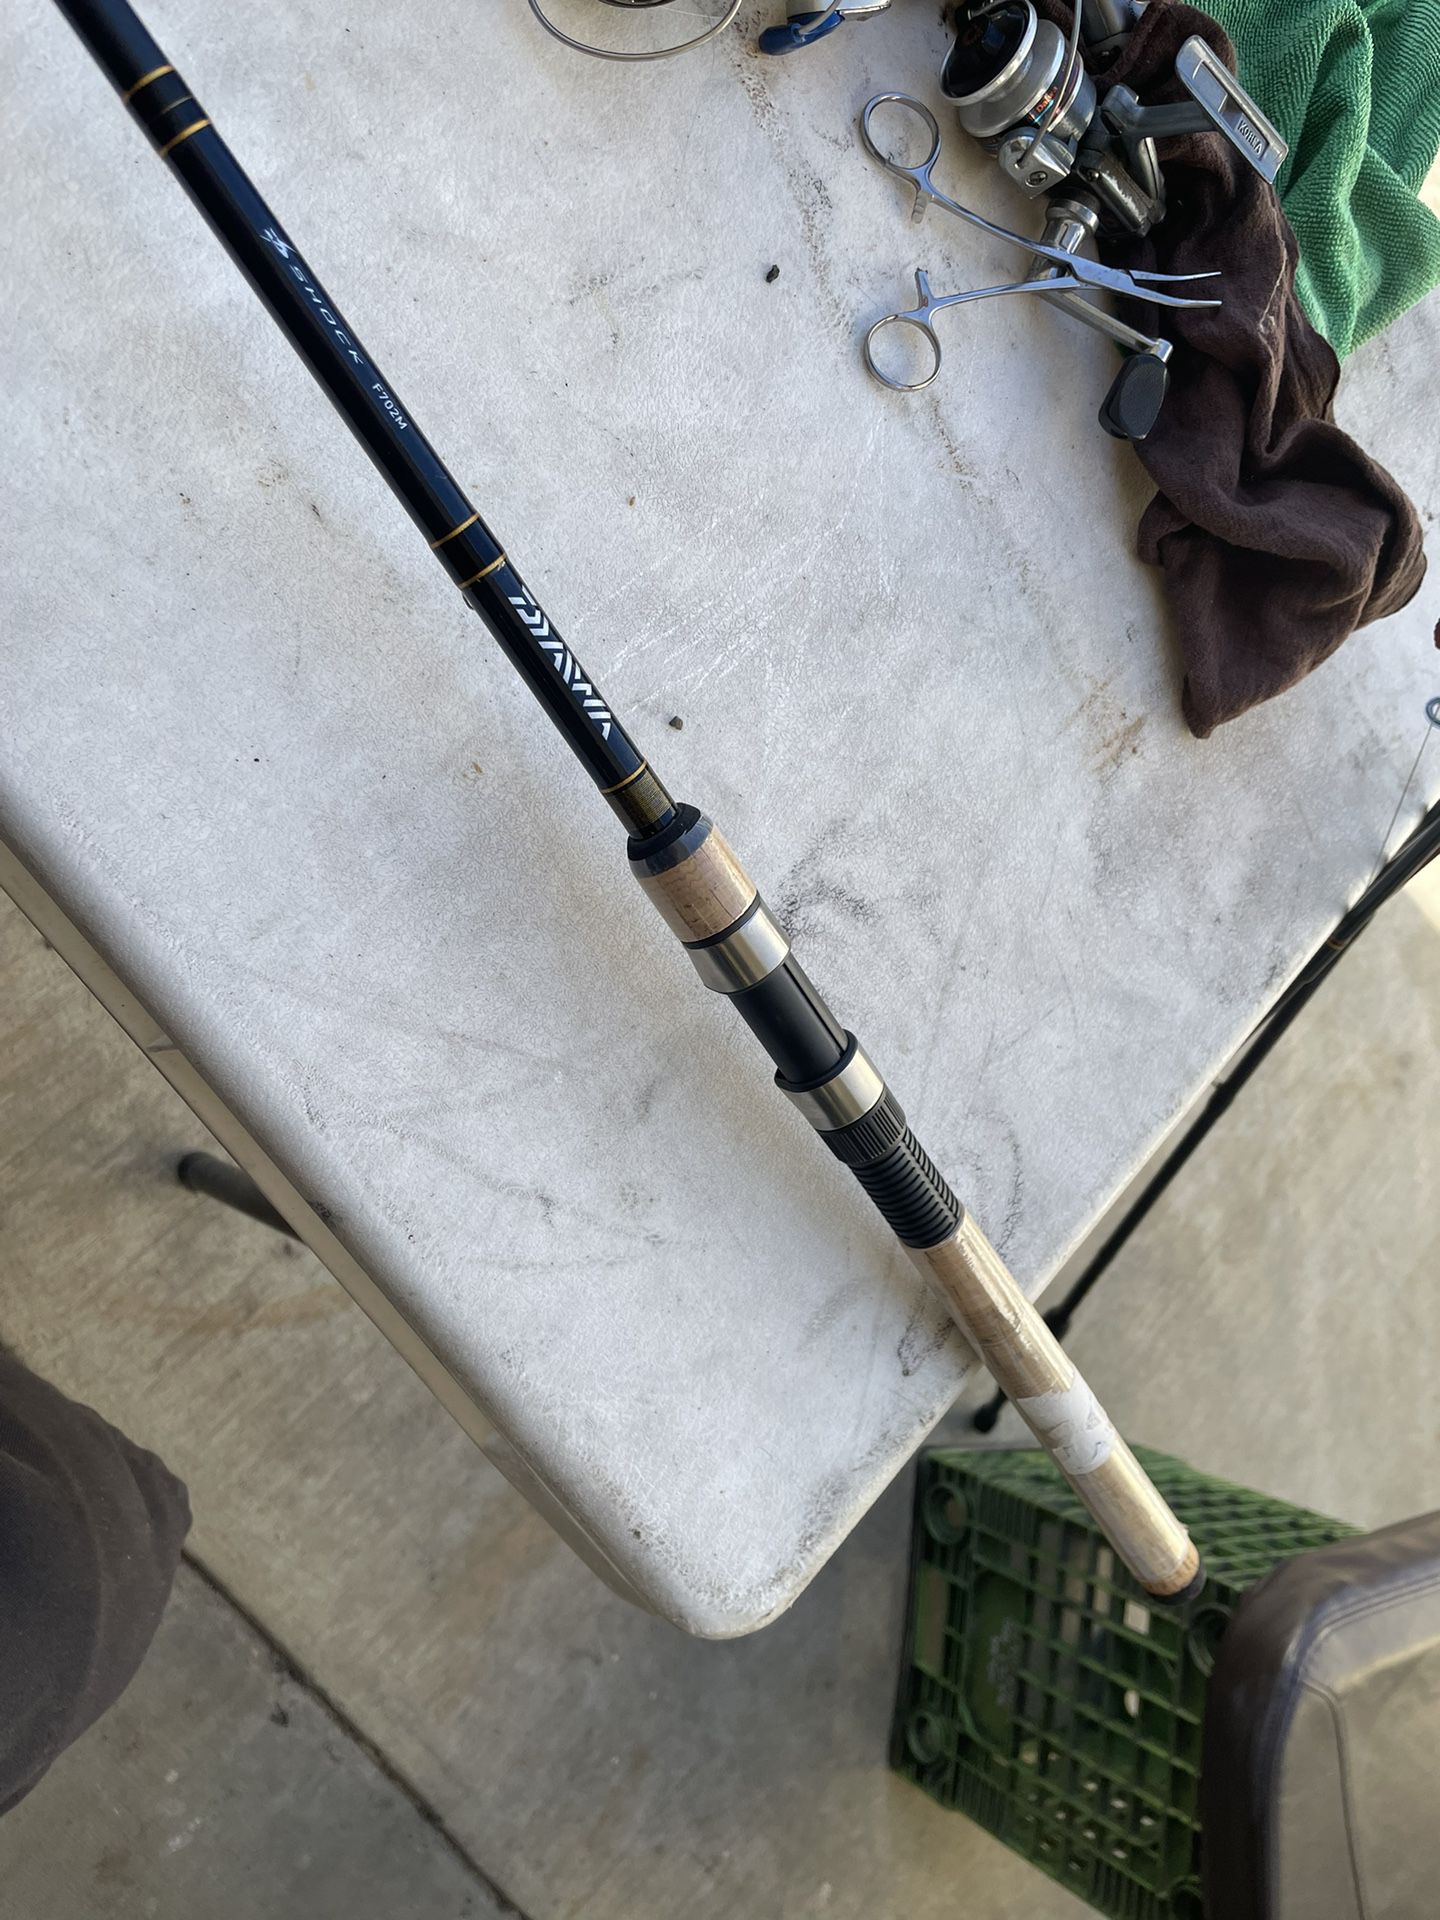 Daiwa Fishing Rod 